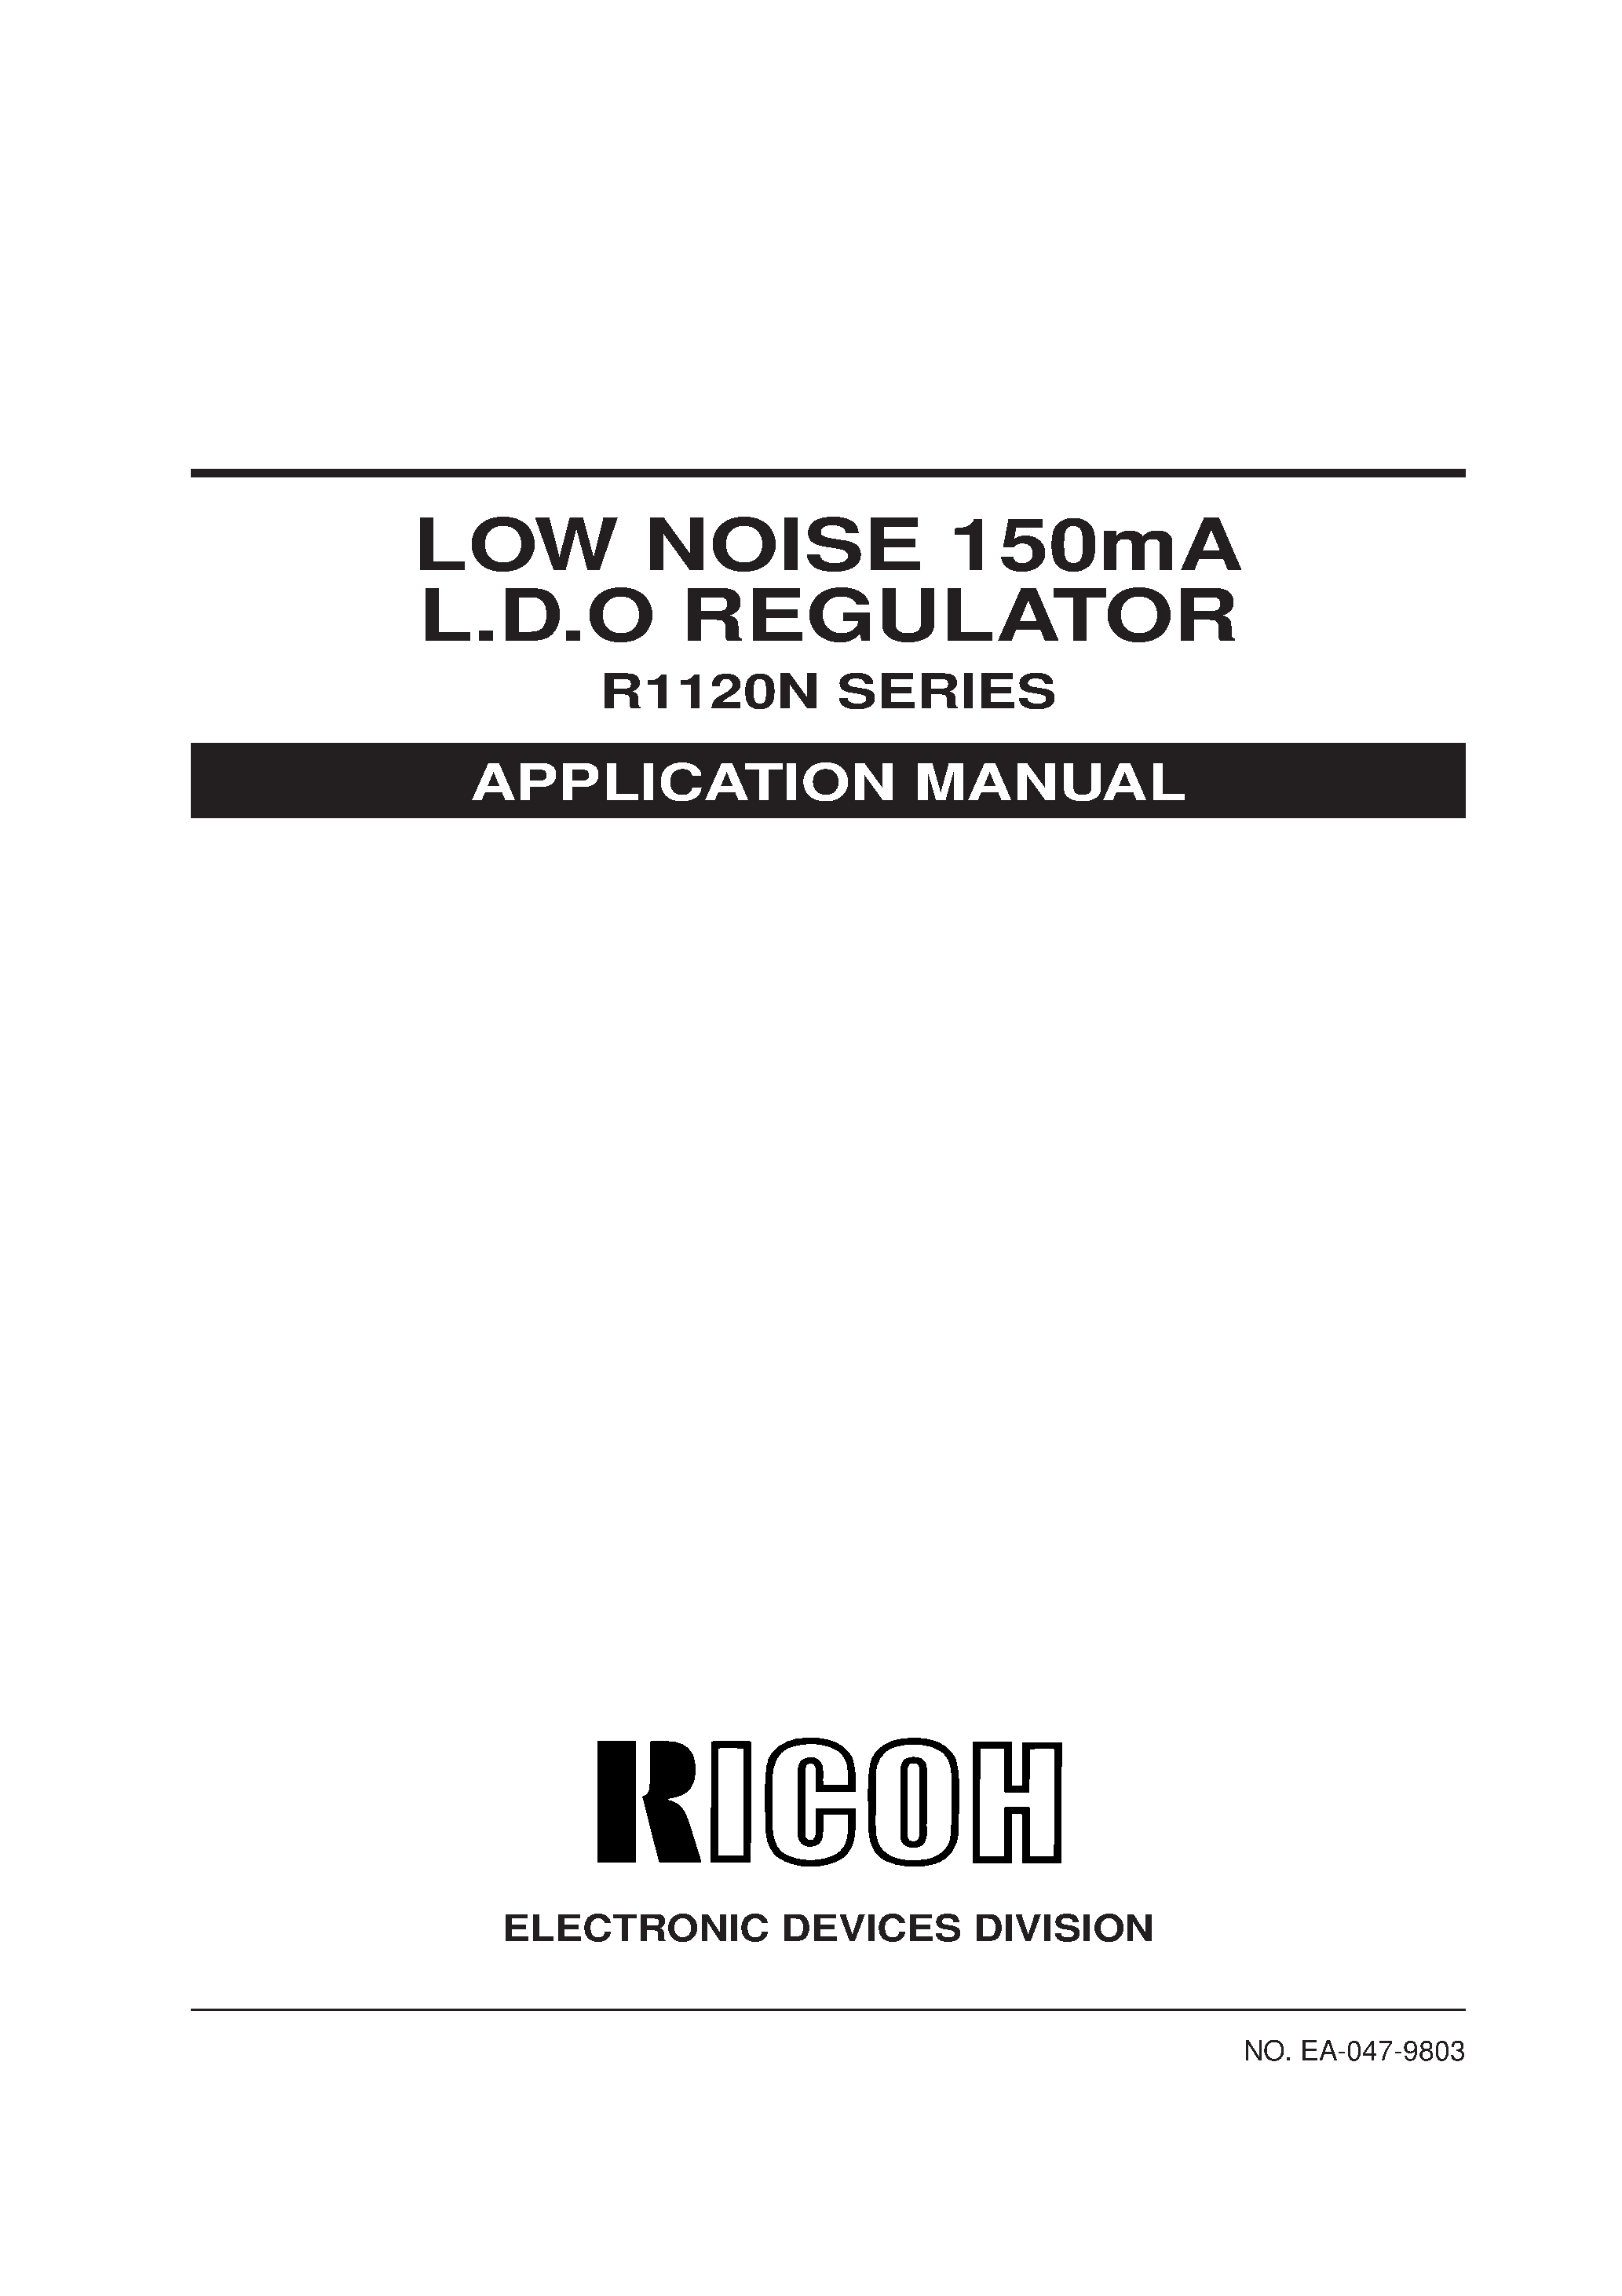 Datasheet R1120N501B - LOW NOISE 150mA L.D.O REGULATOR page 1